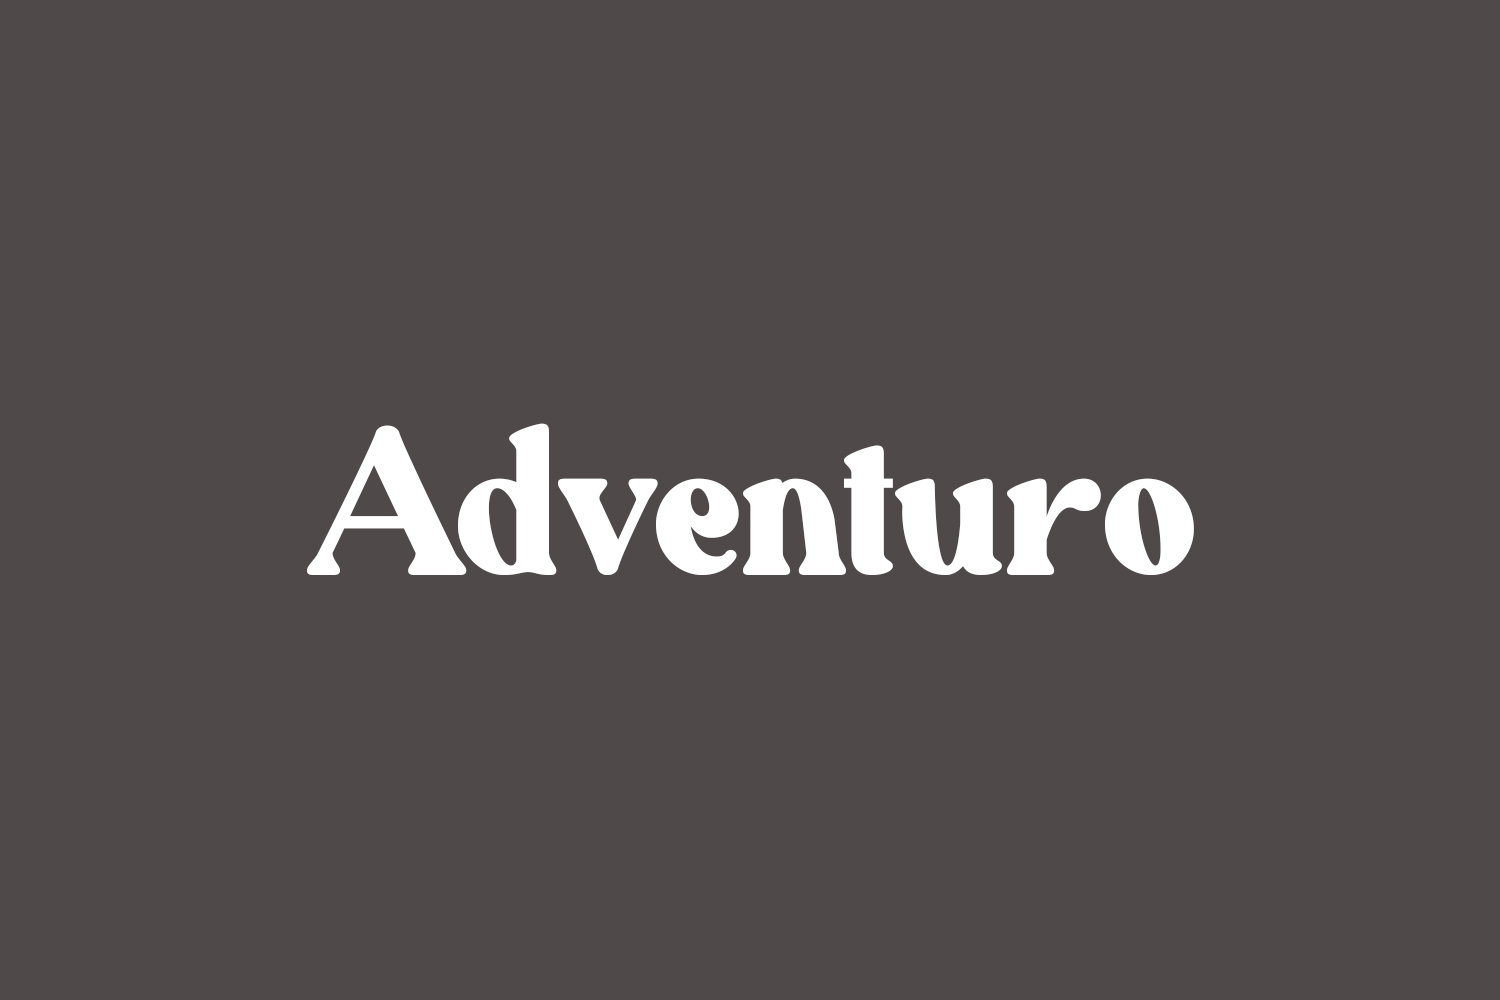 Adventuro Free Font